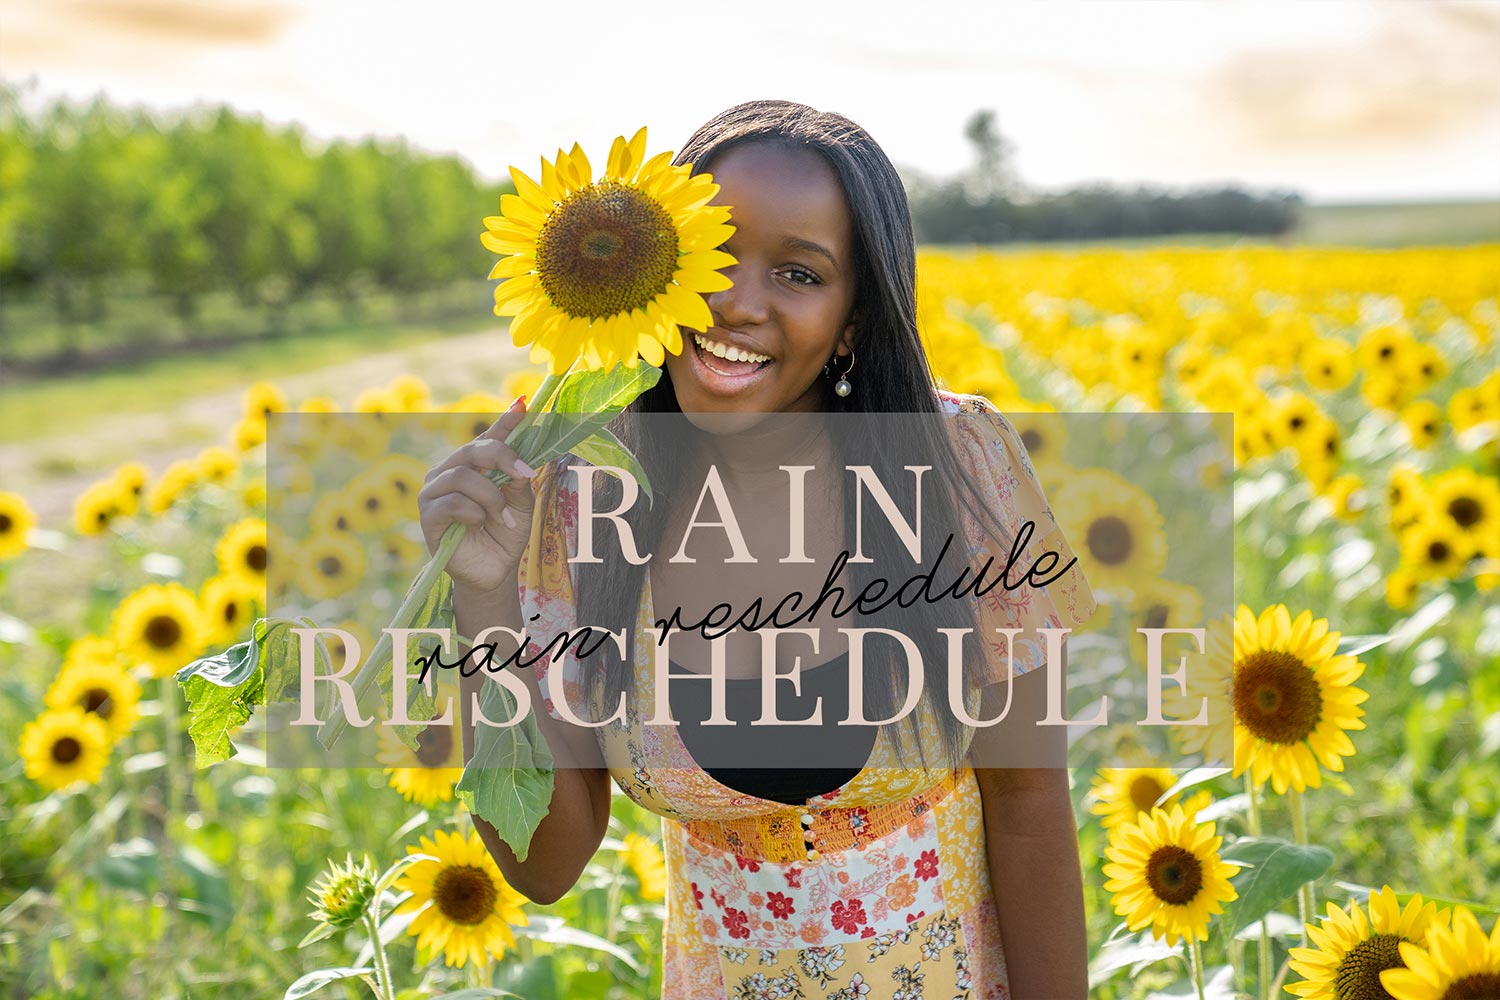 Rain reschedule